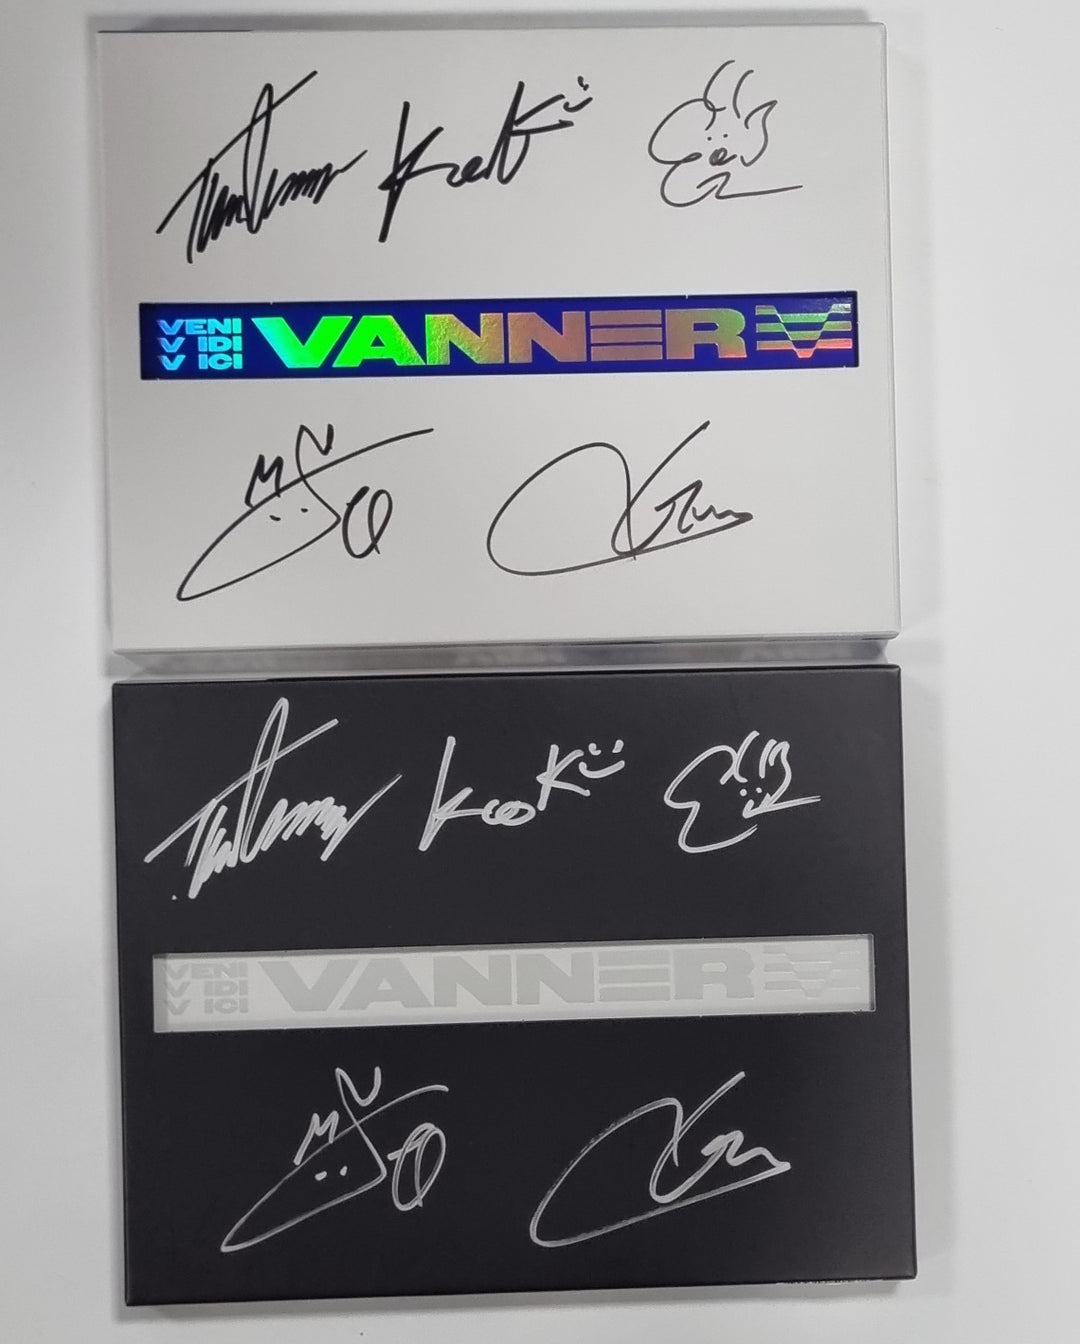 VANNER "VENI VIDI VICI" - Hand Autographed(Signed) Promo Album [23.08.25]